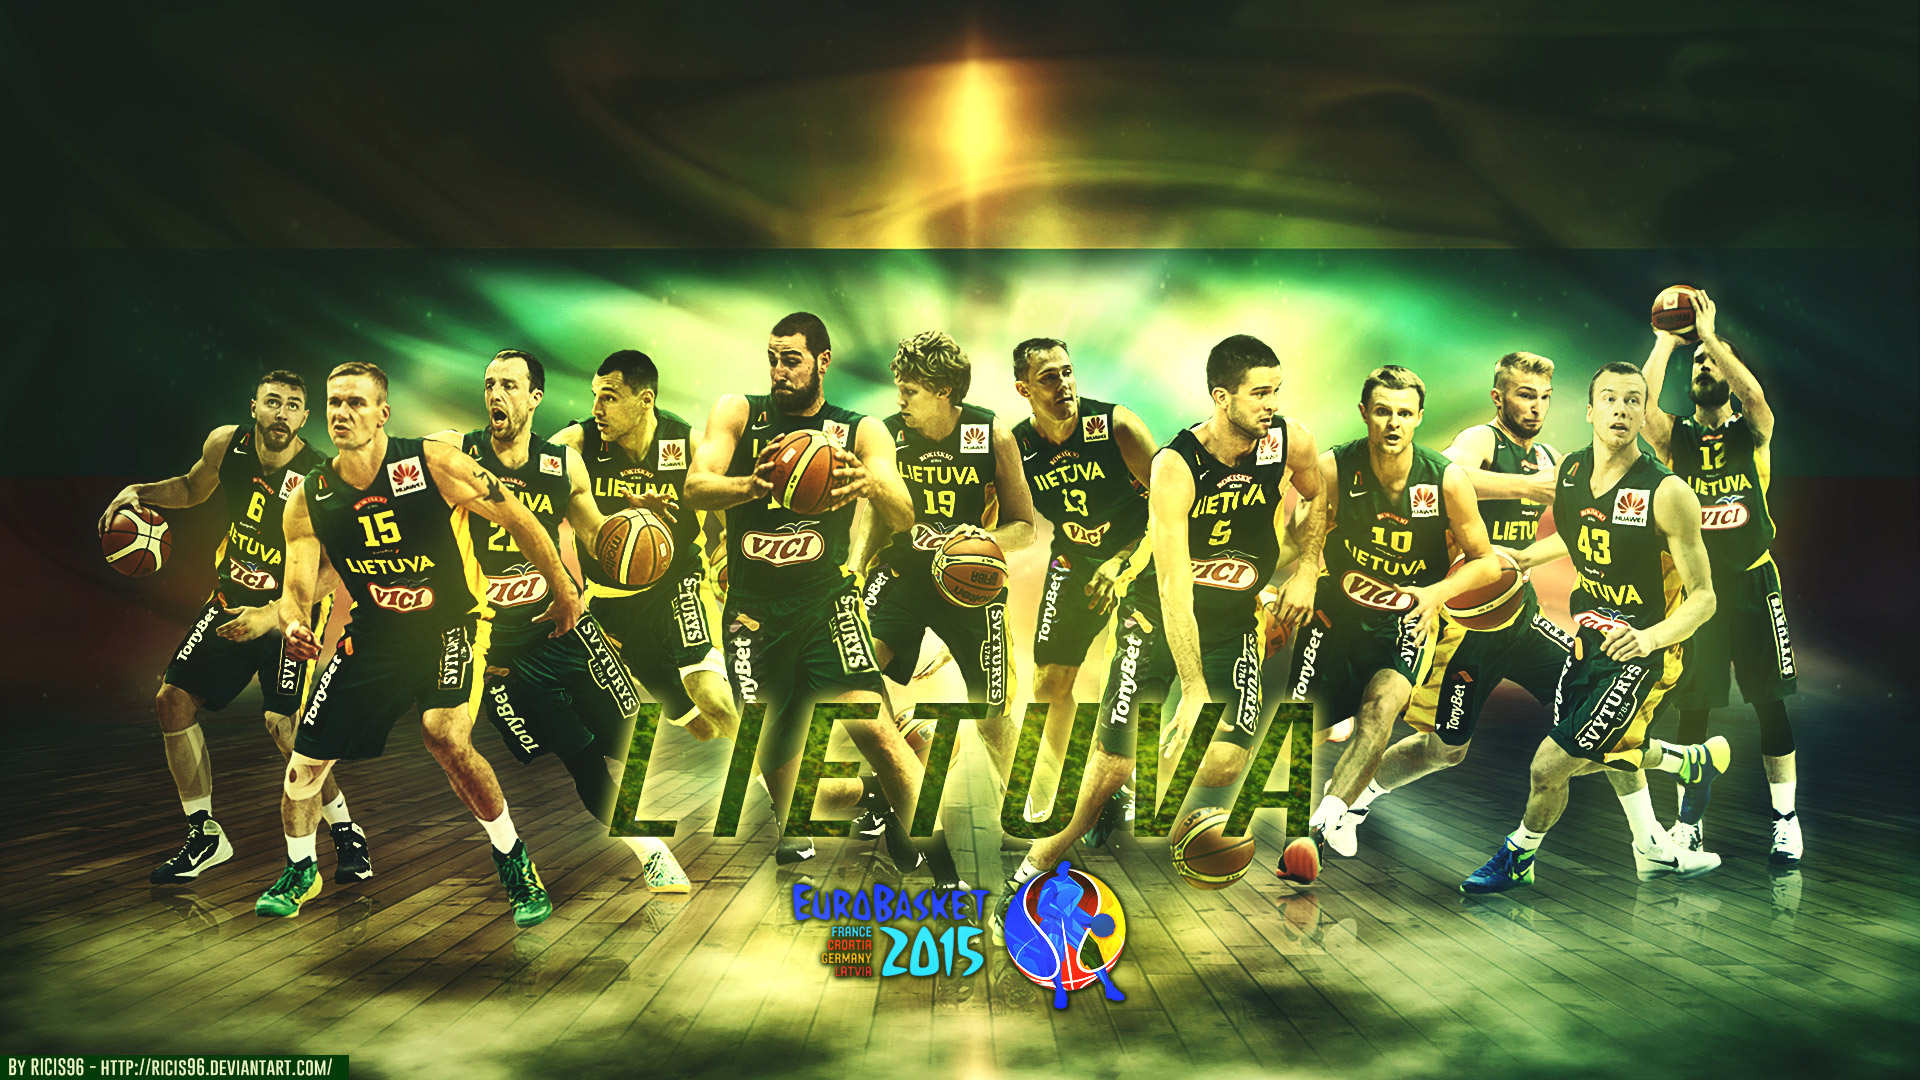 Lithuania Team Eurobasket 2015 1920x1080 Wallpaper